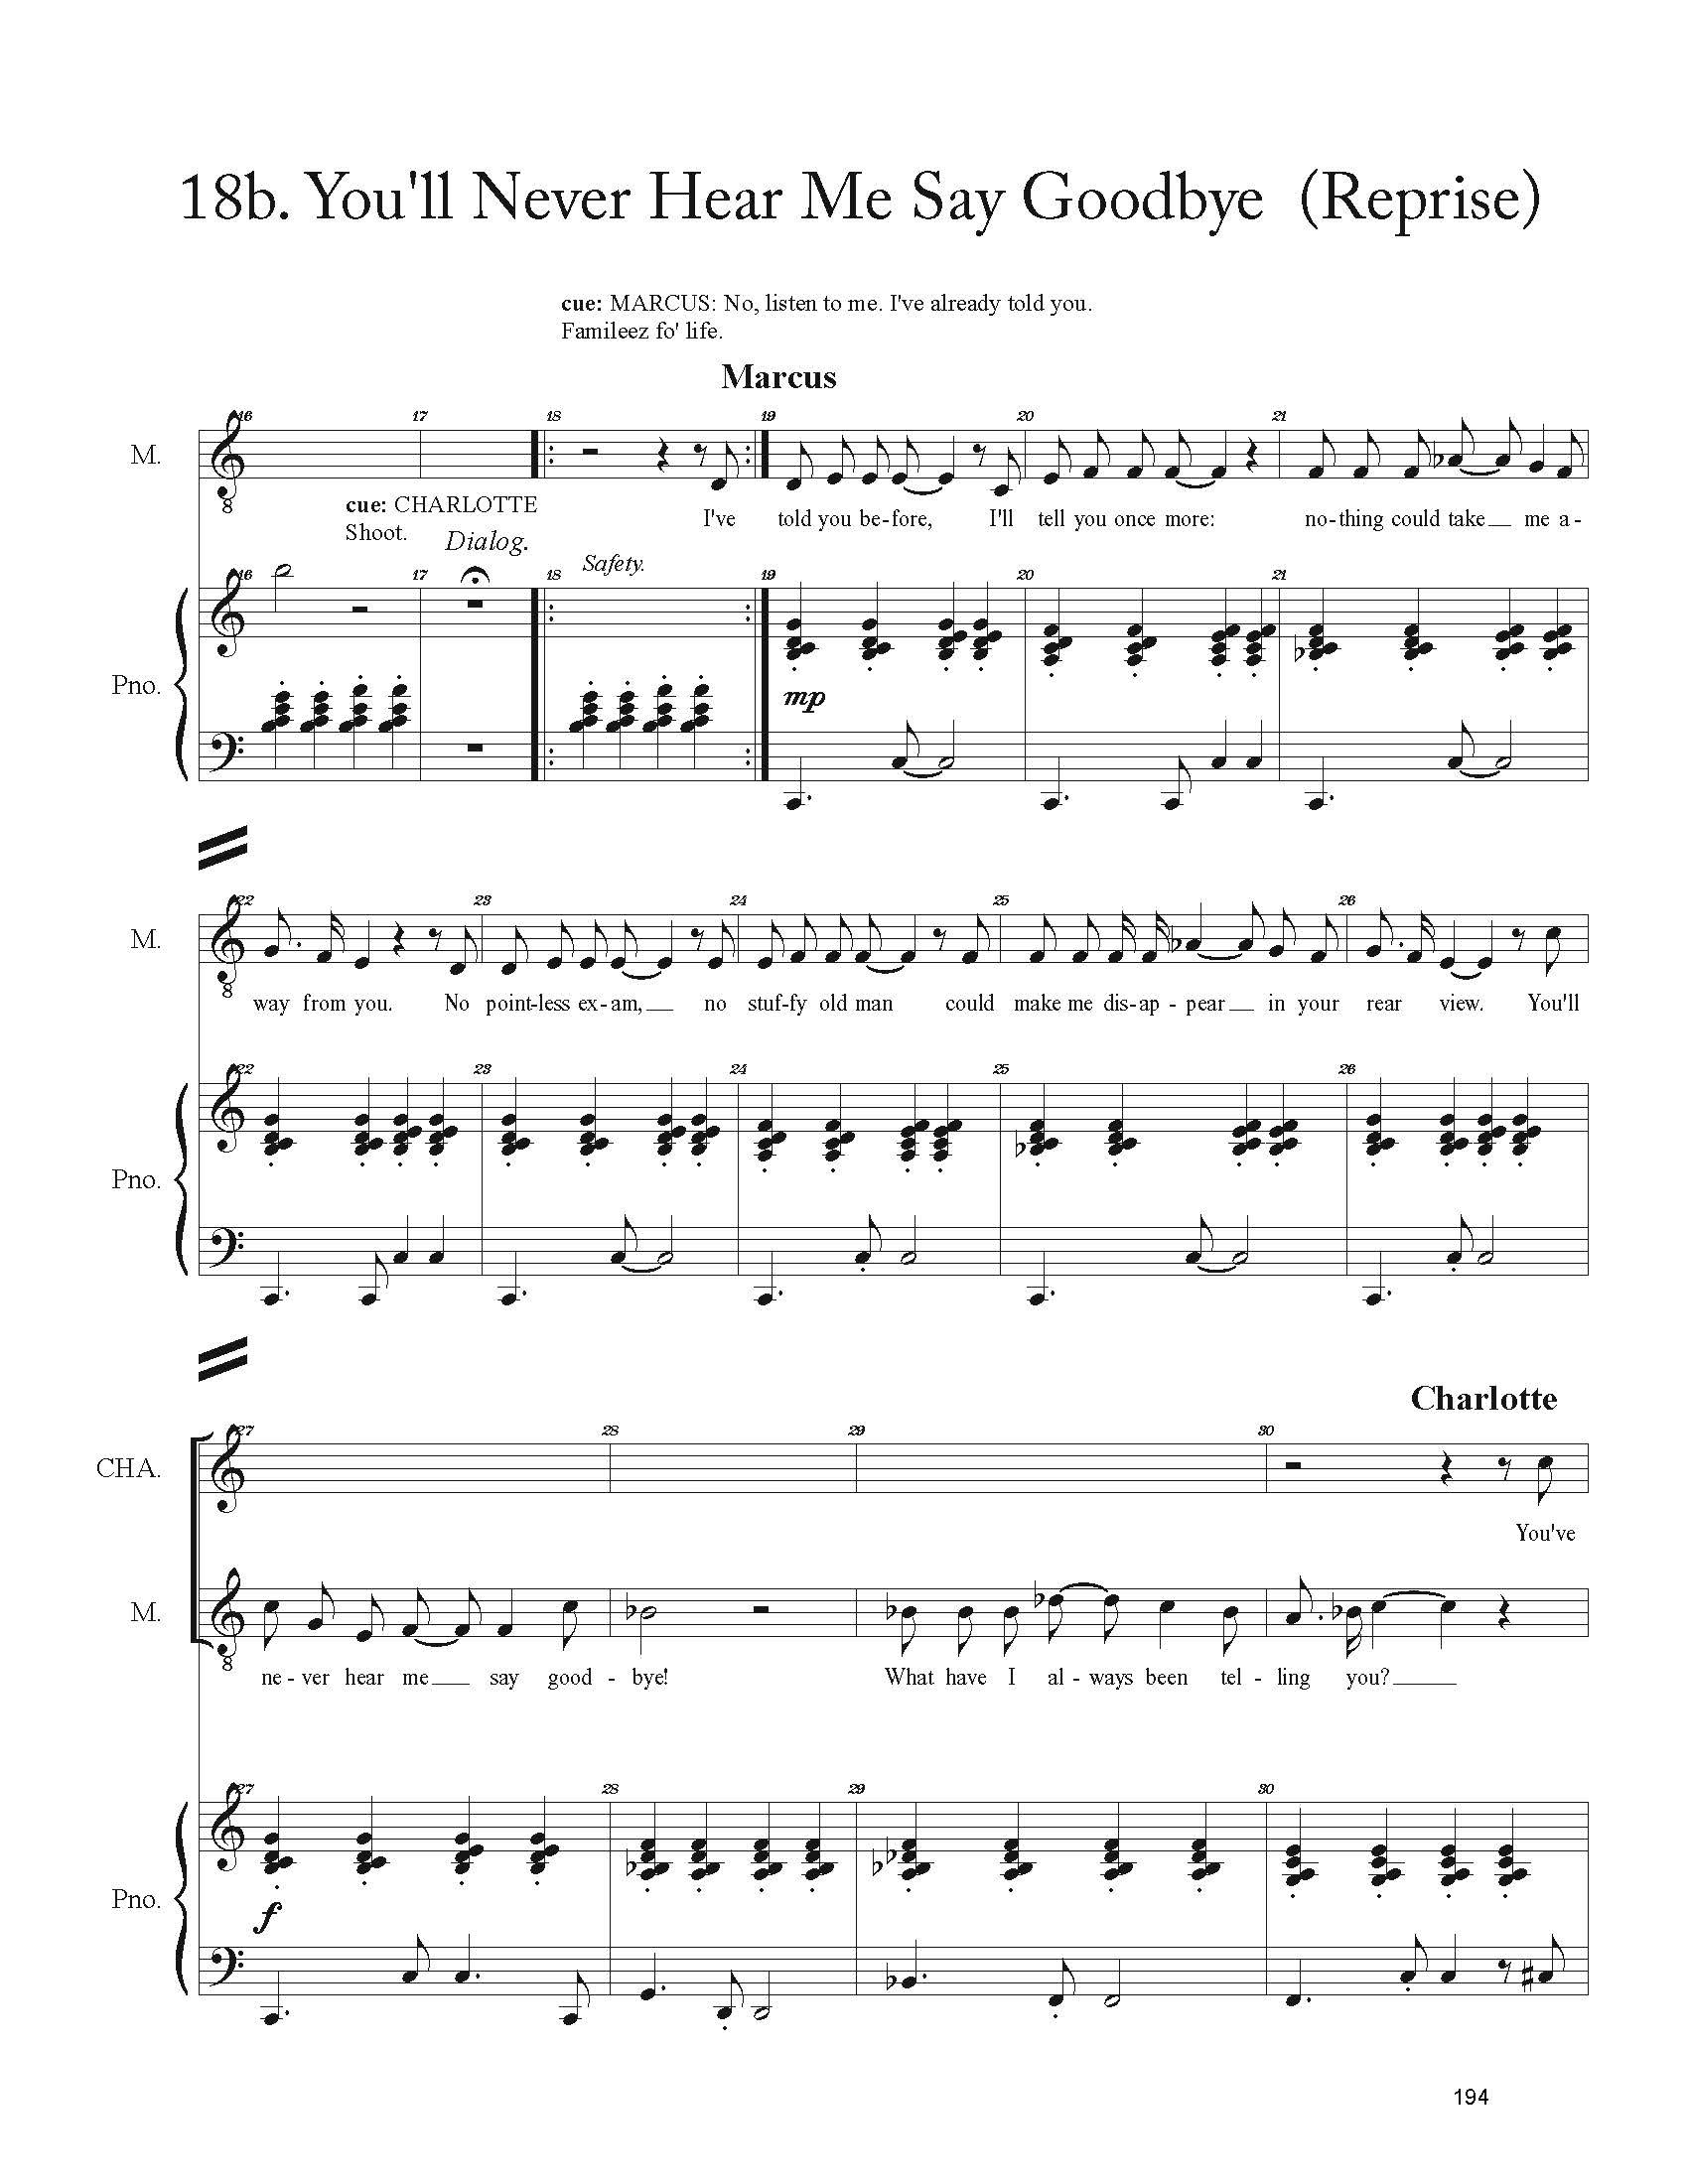 FULL PIANO VOCAL SCORE DRAFT 1 - Score_Page_194.jpg